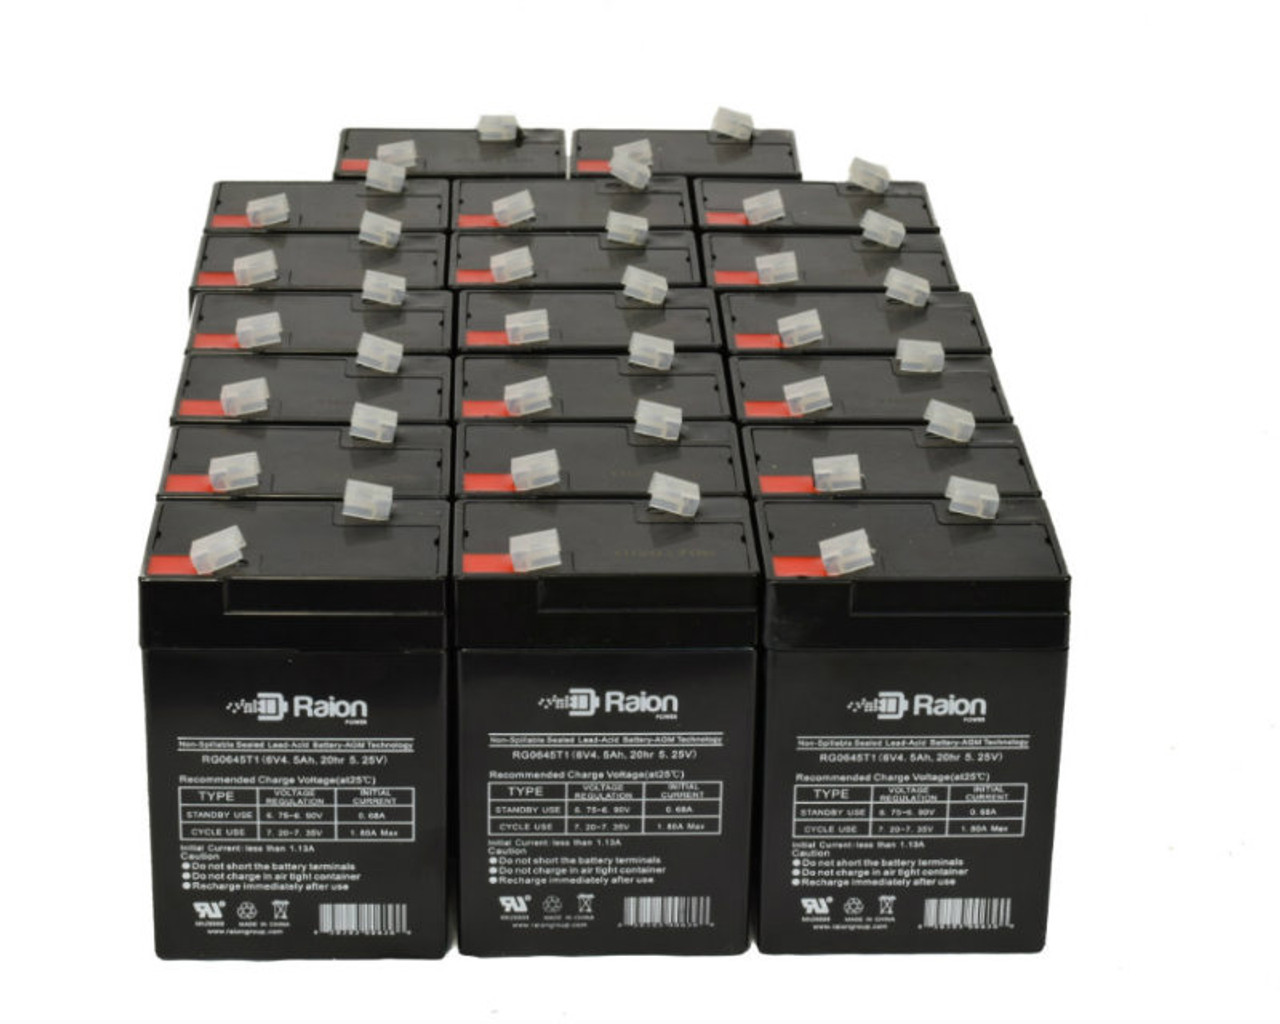 Raion Power 6V 4.5Ah Replacement Emergency Light Battery for Sonnenschein S300 - 20 Pack